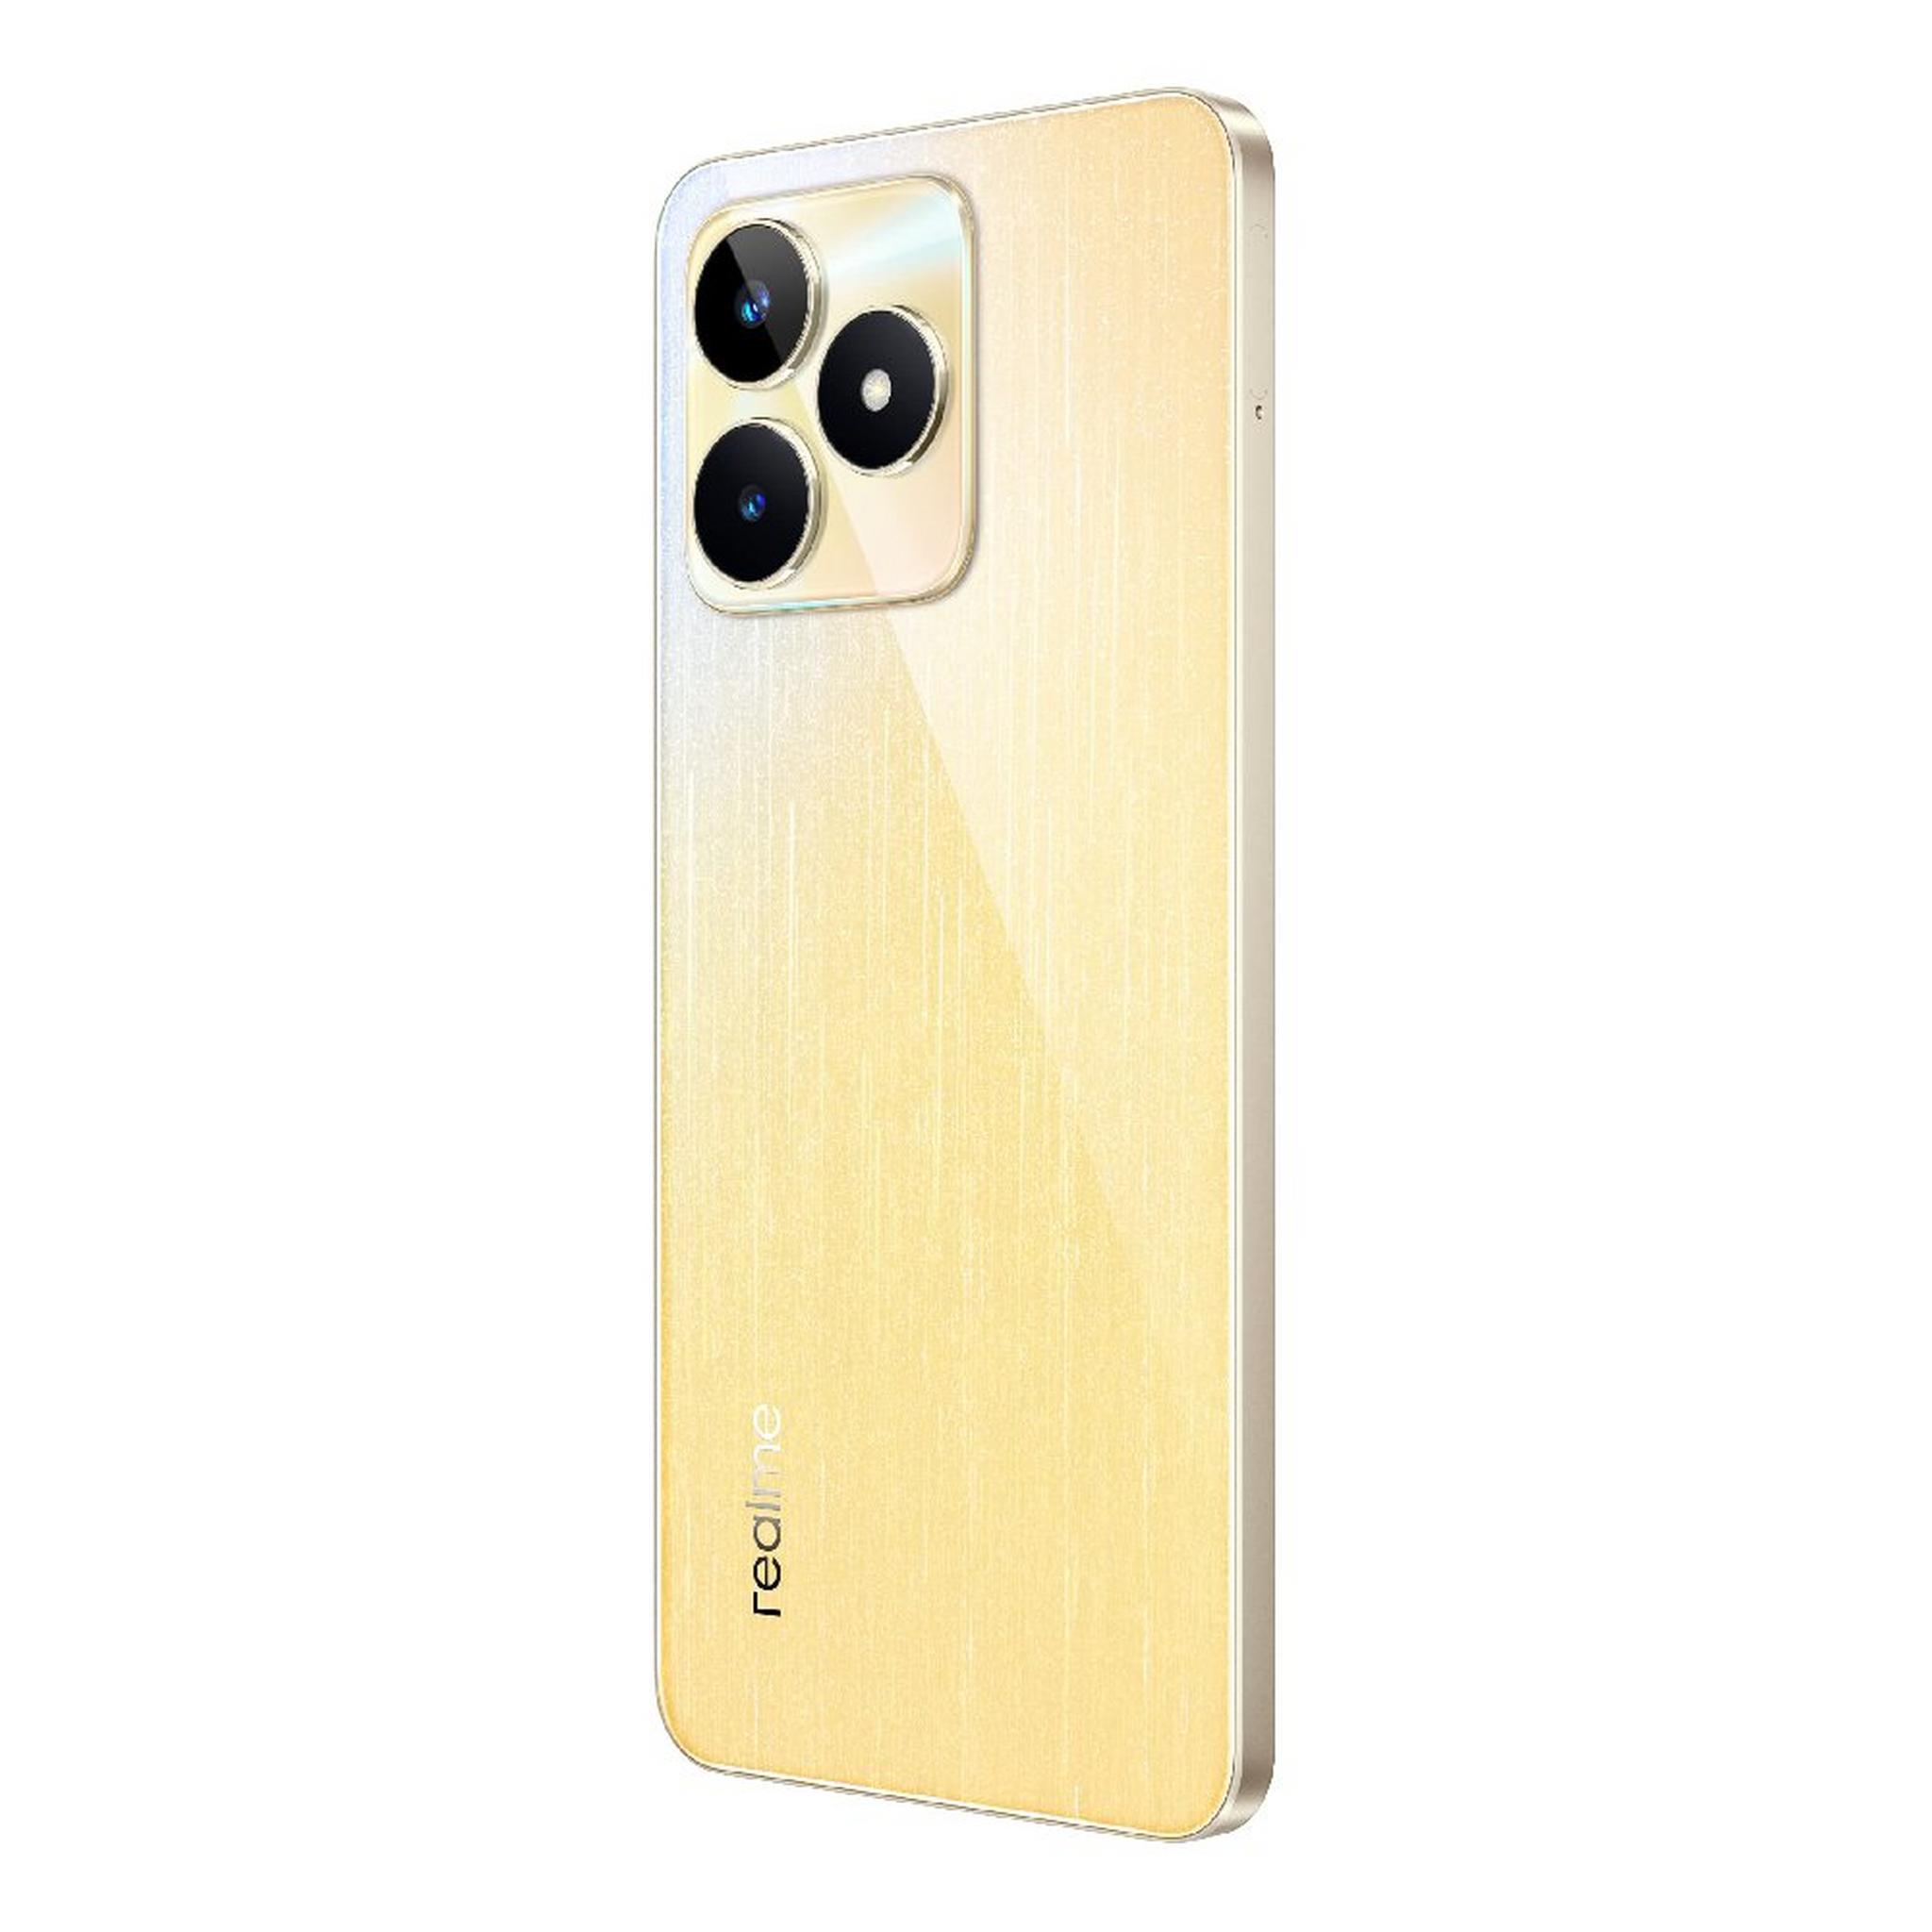 Realme C53 Phone, 6.7-inch, 8GB RAM, 256GB – Gold